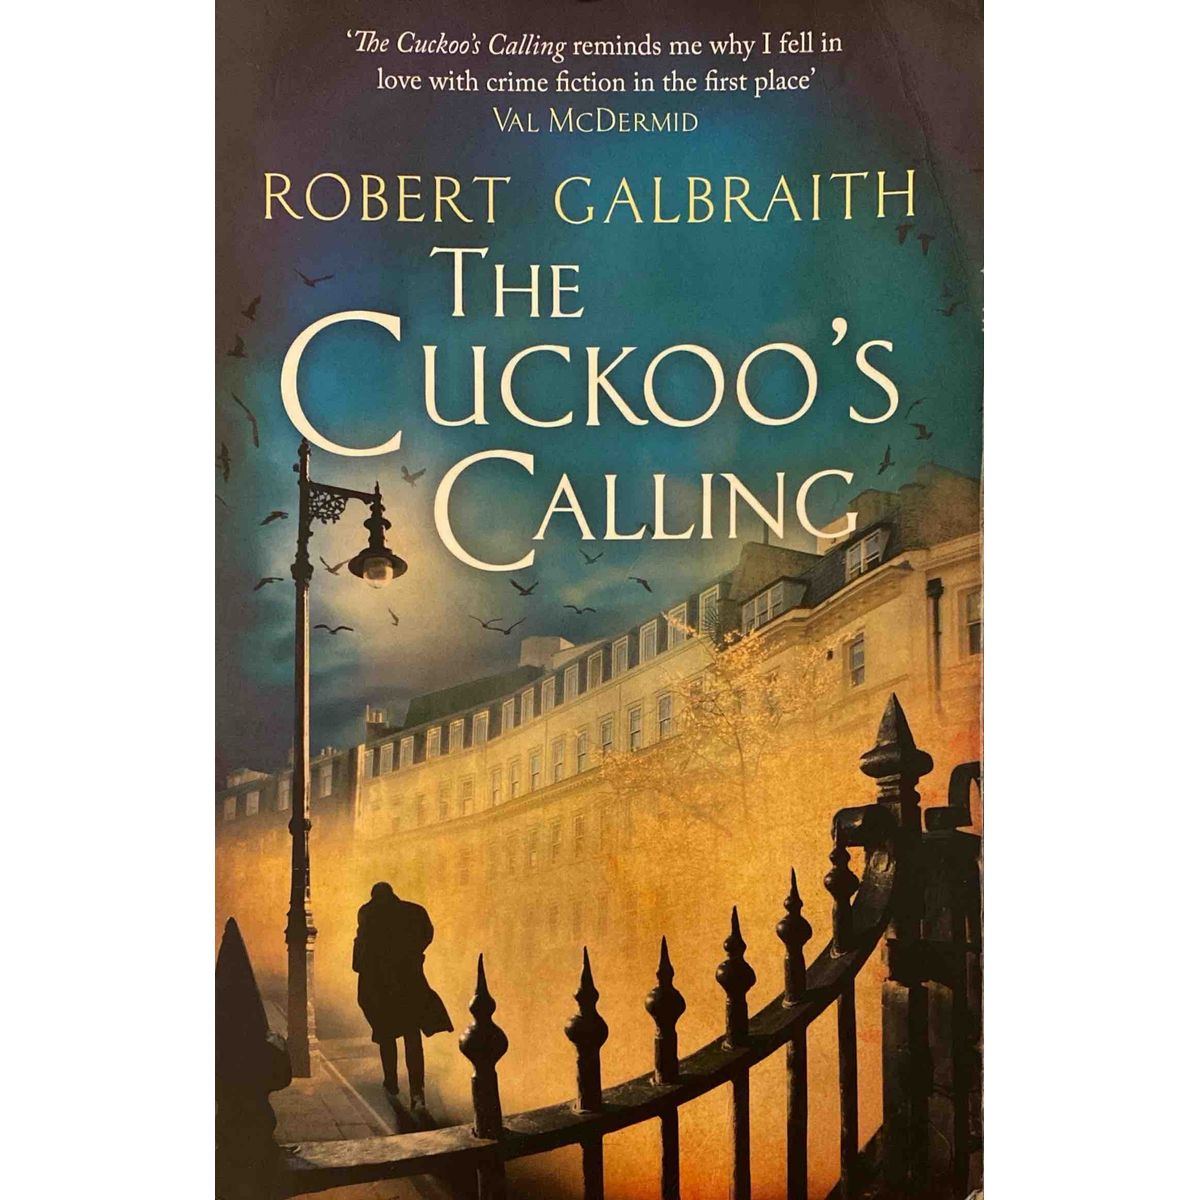 ISBN: 9781408704004 / 1408704005 - The Cuckoo's Calling by Robert Galbraith [2013]